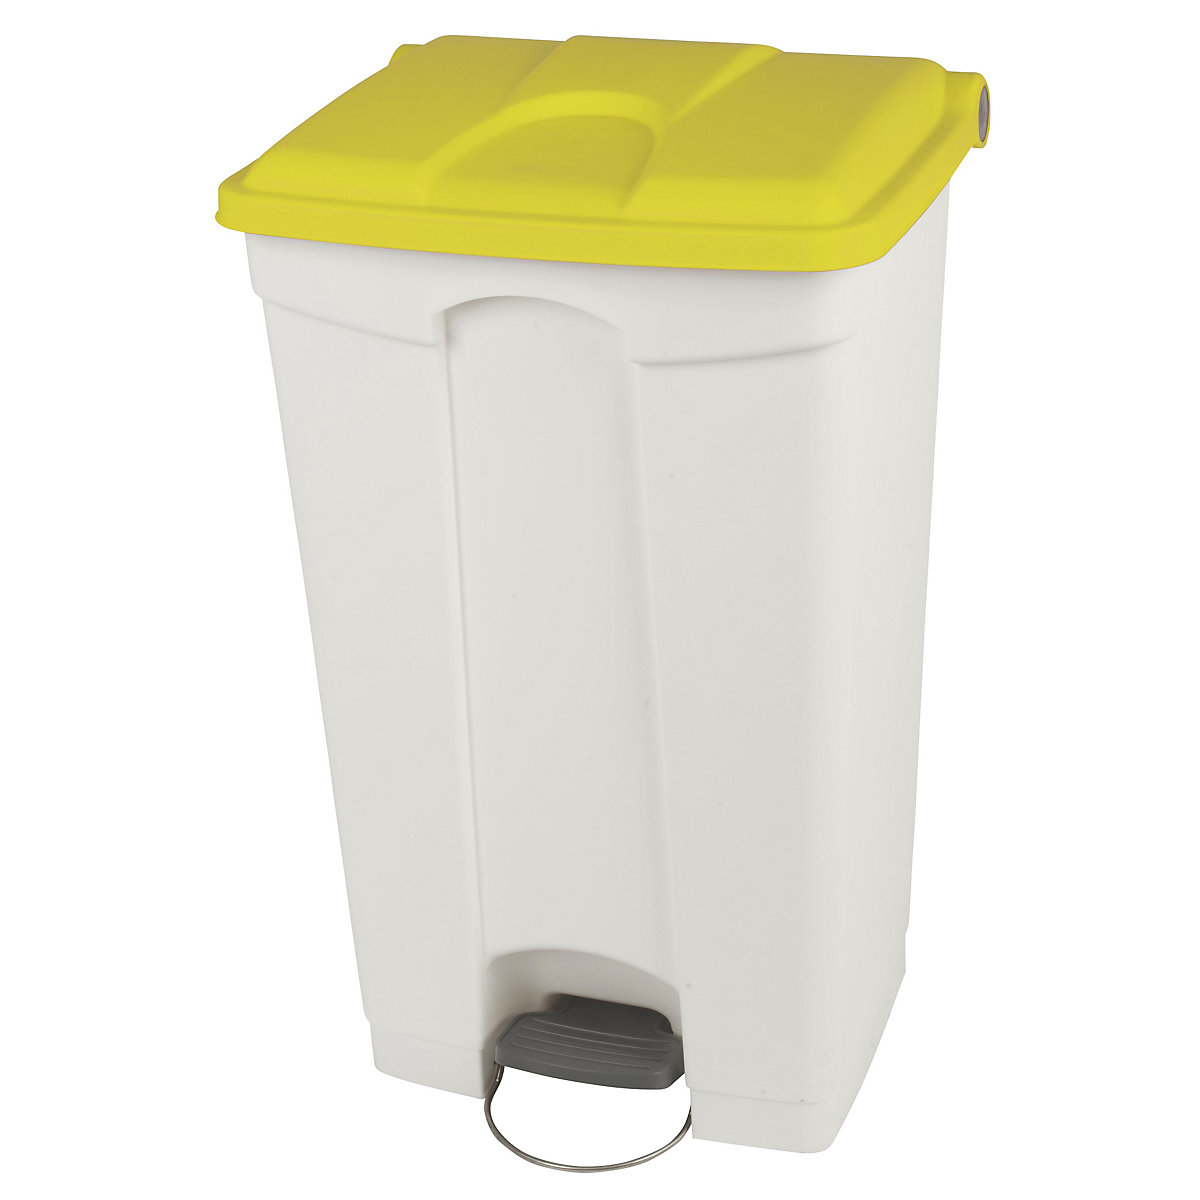 EUROKRAFTbasic – Pedal waste collector, capacity 90 l, WxHxD 505 x 790 x 410 mm, white, yellow lid